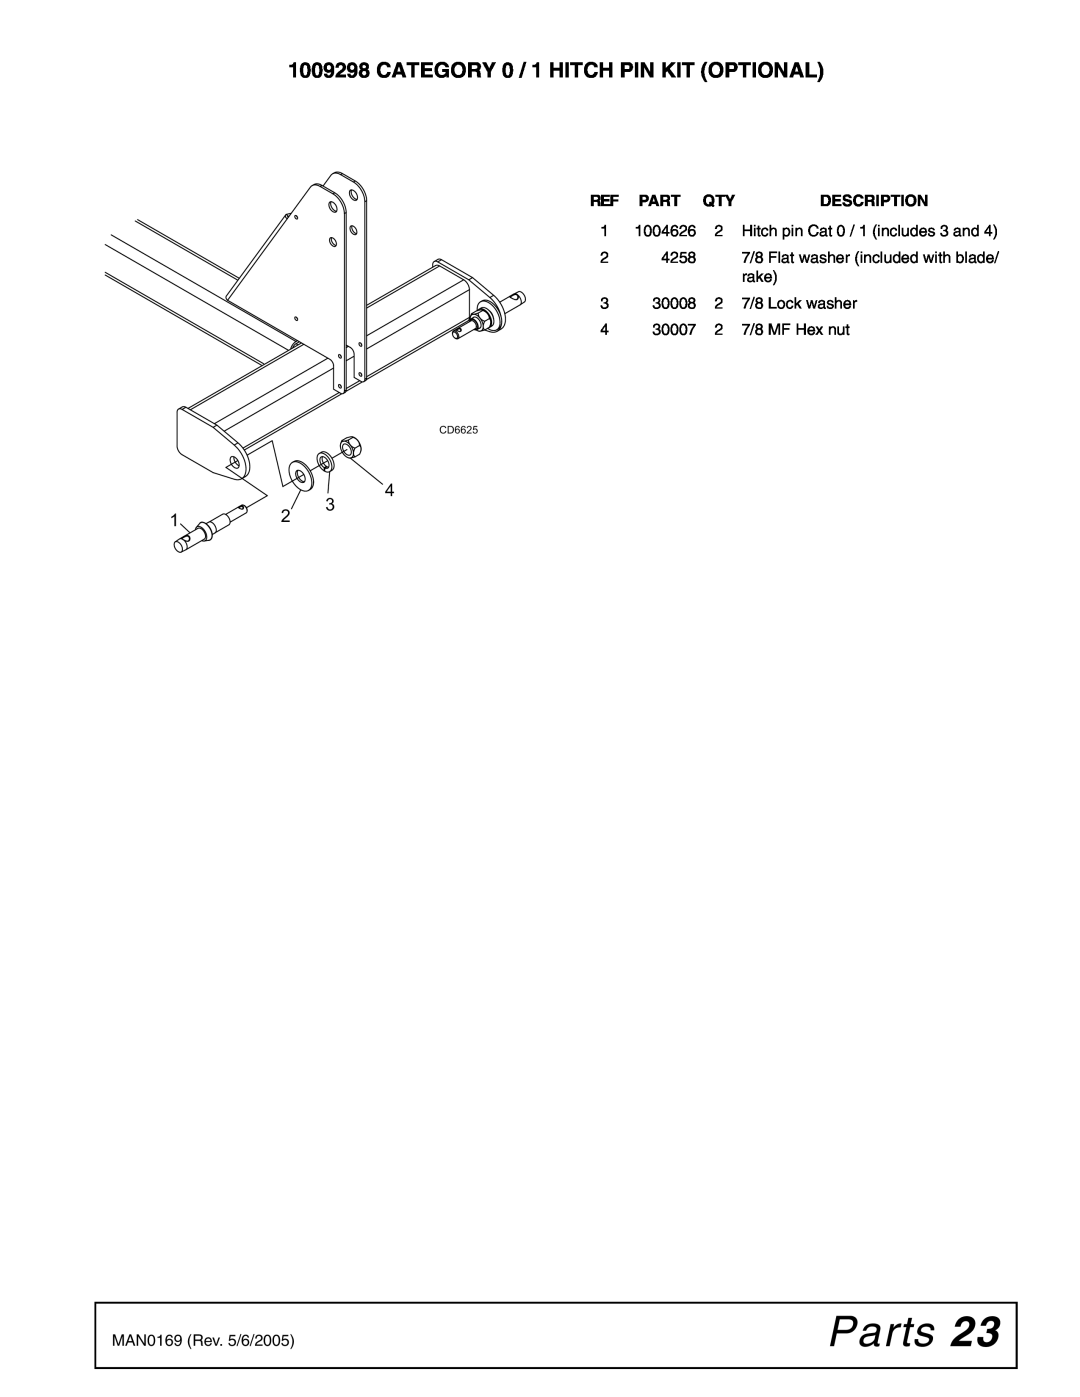 Woods Equipment RBC60 LRC60 manual CATEGORY 0 / 1 HITCH PIN KIT OPTIONAL, Parts, Description, CD6625 